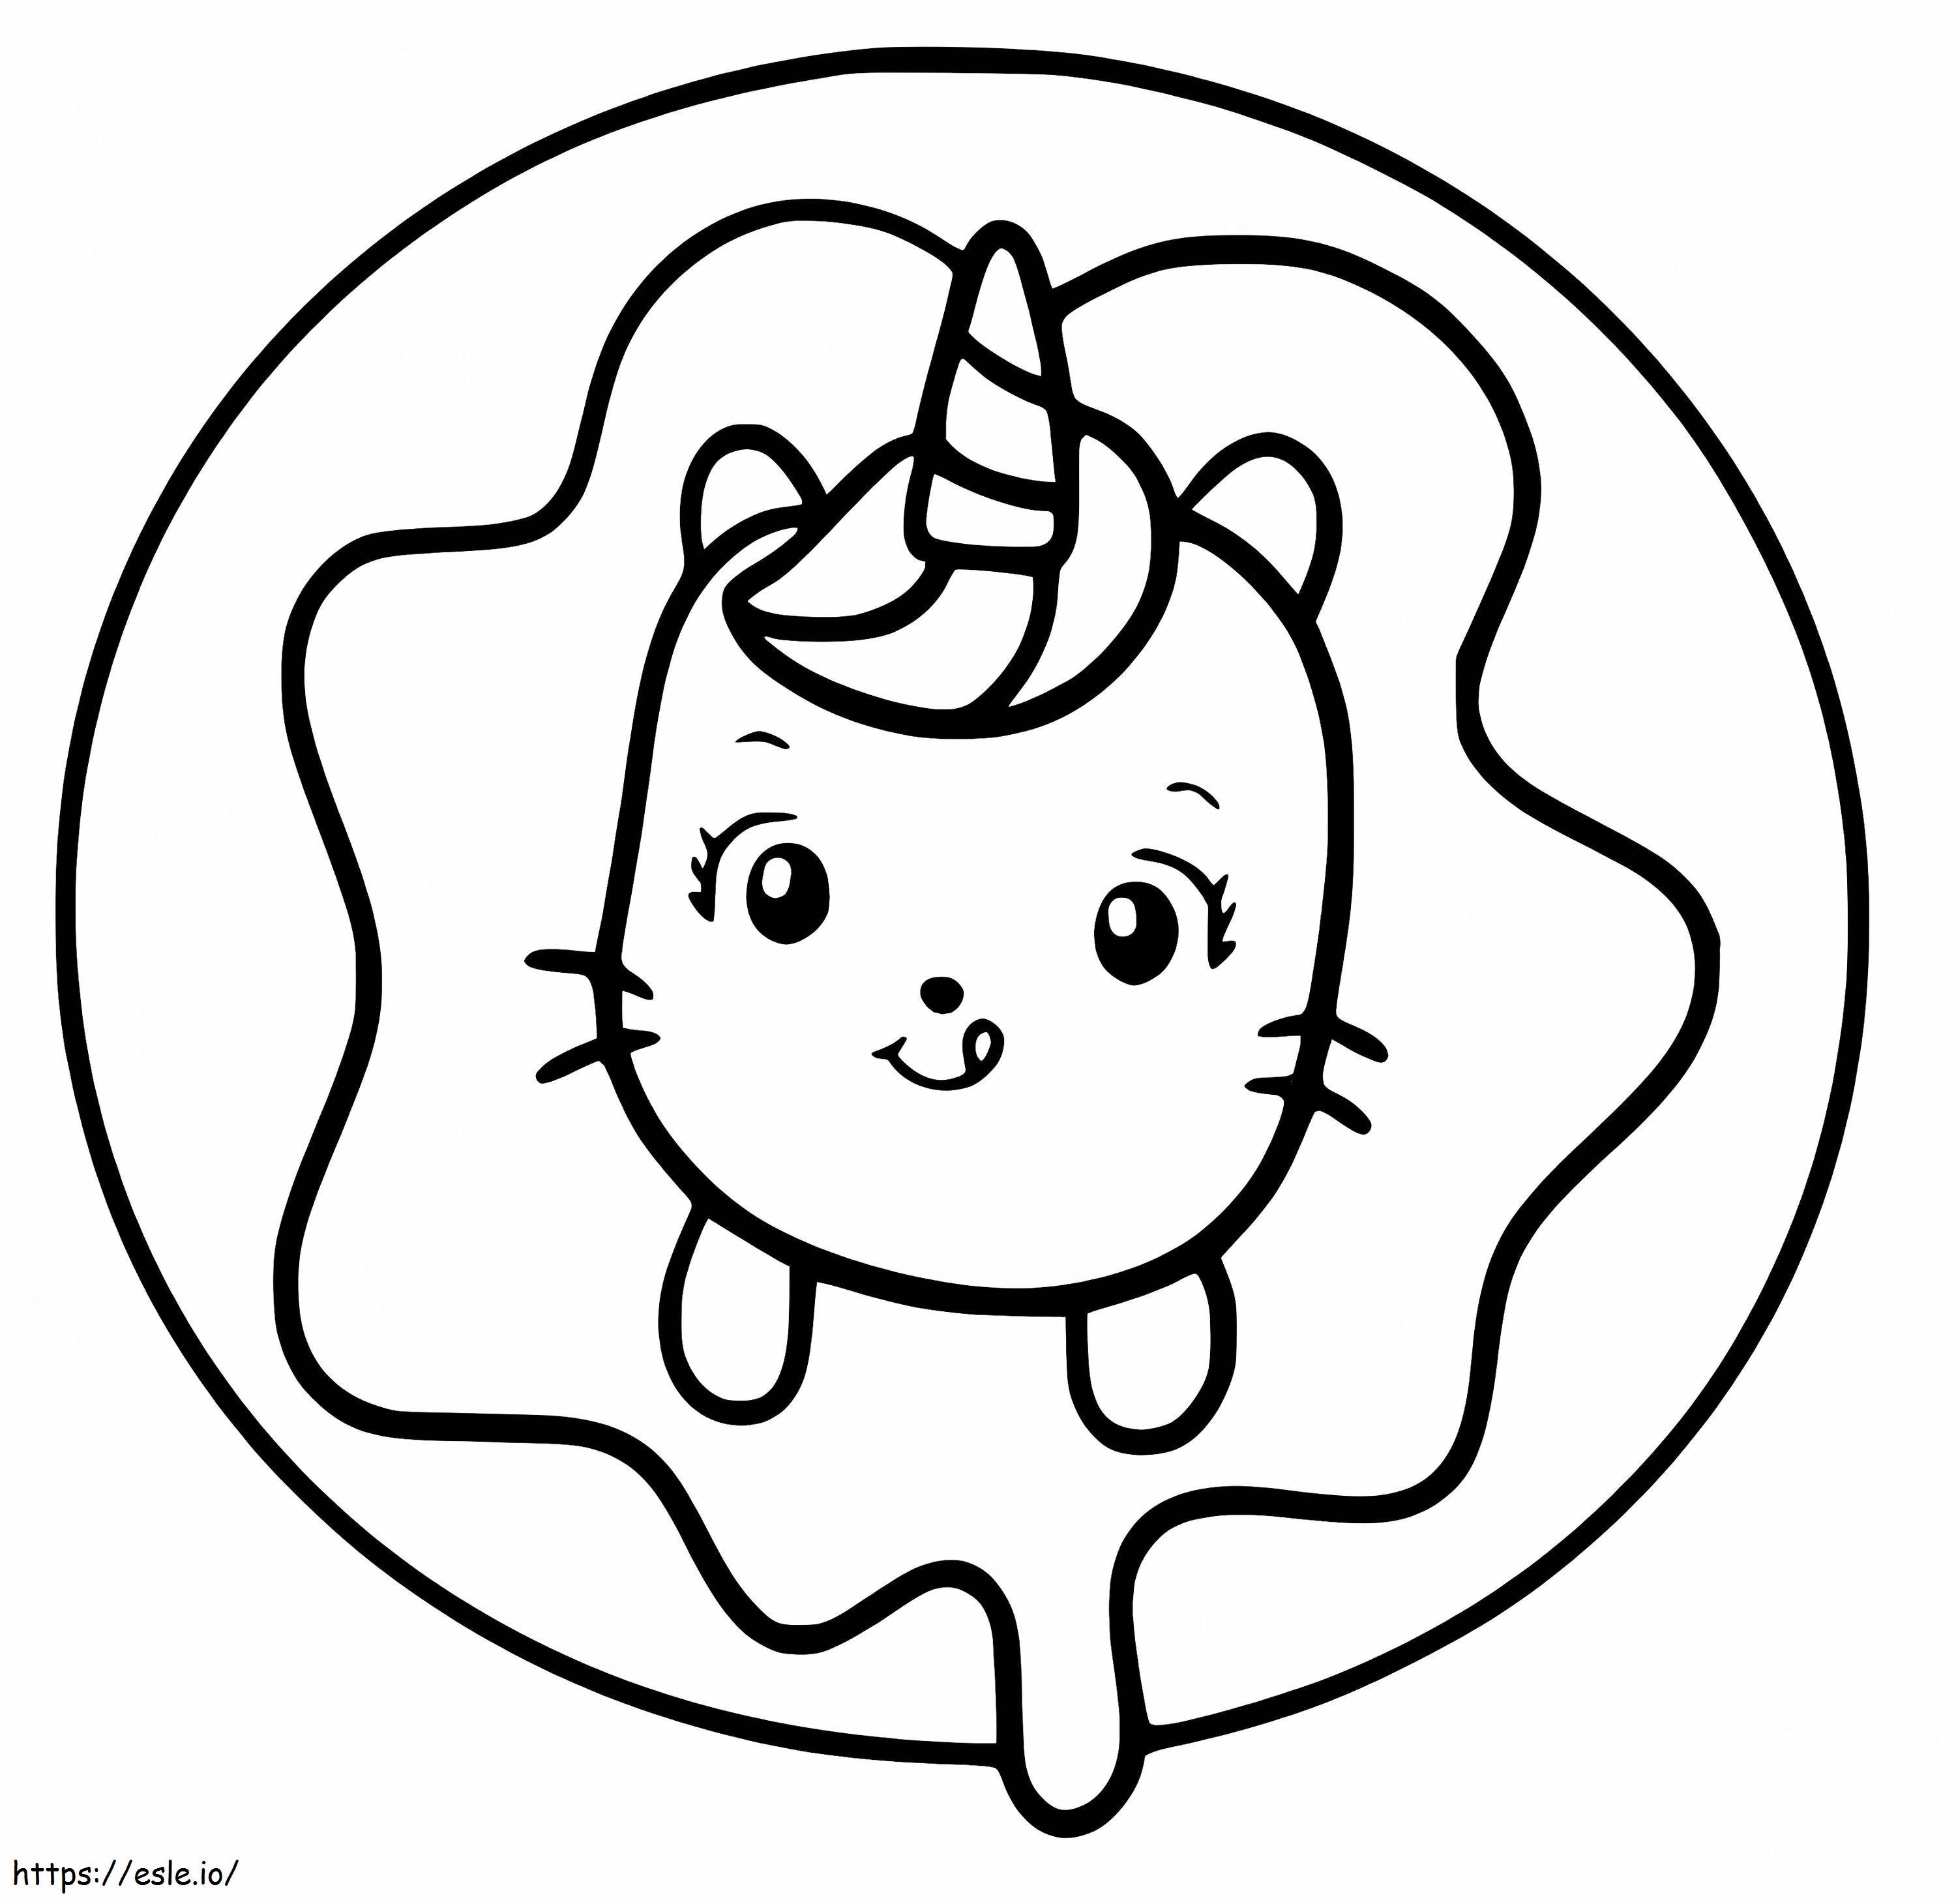 Gato Unicornio En Donut para colorear